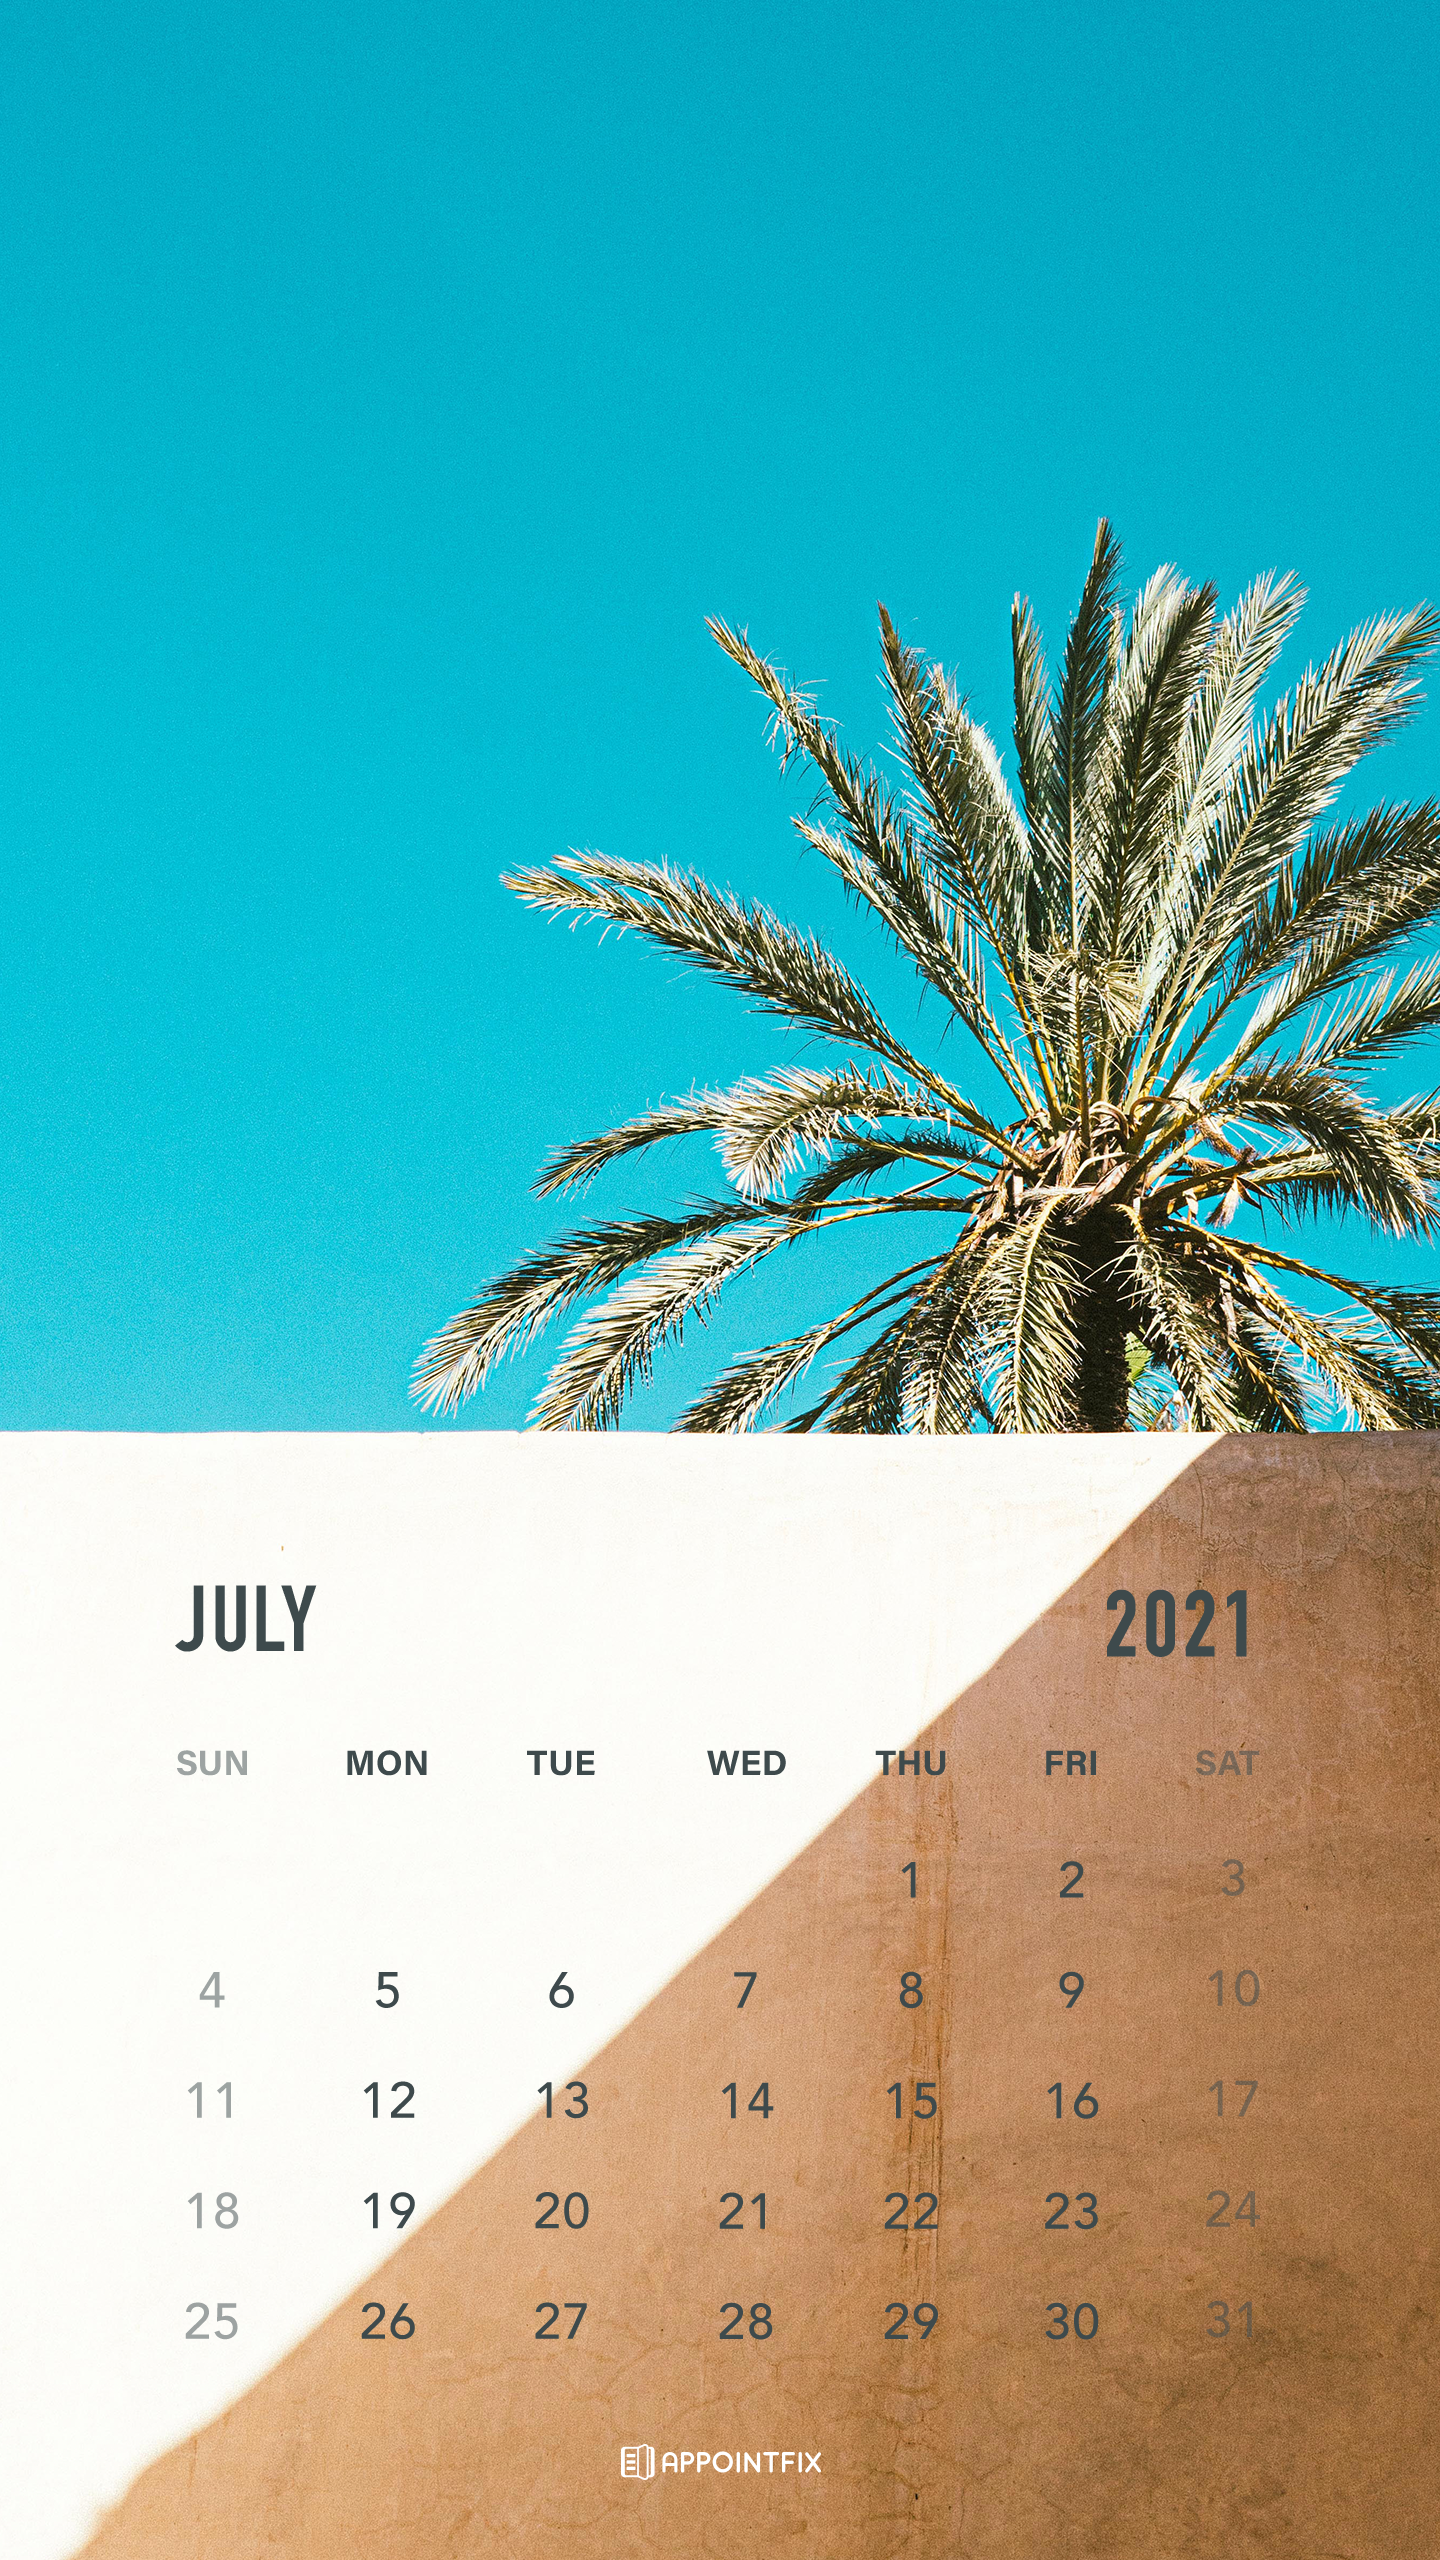 Free July 2021 Calendar Wallpapers - Desktop & Mobile